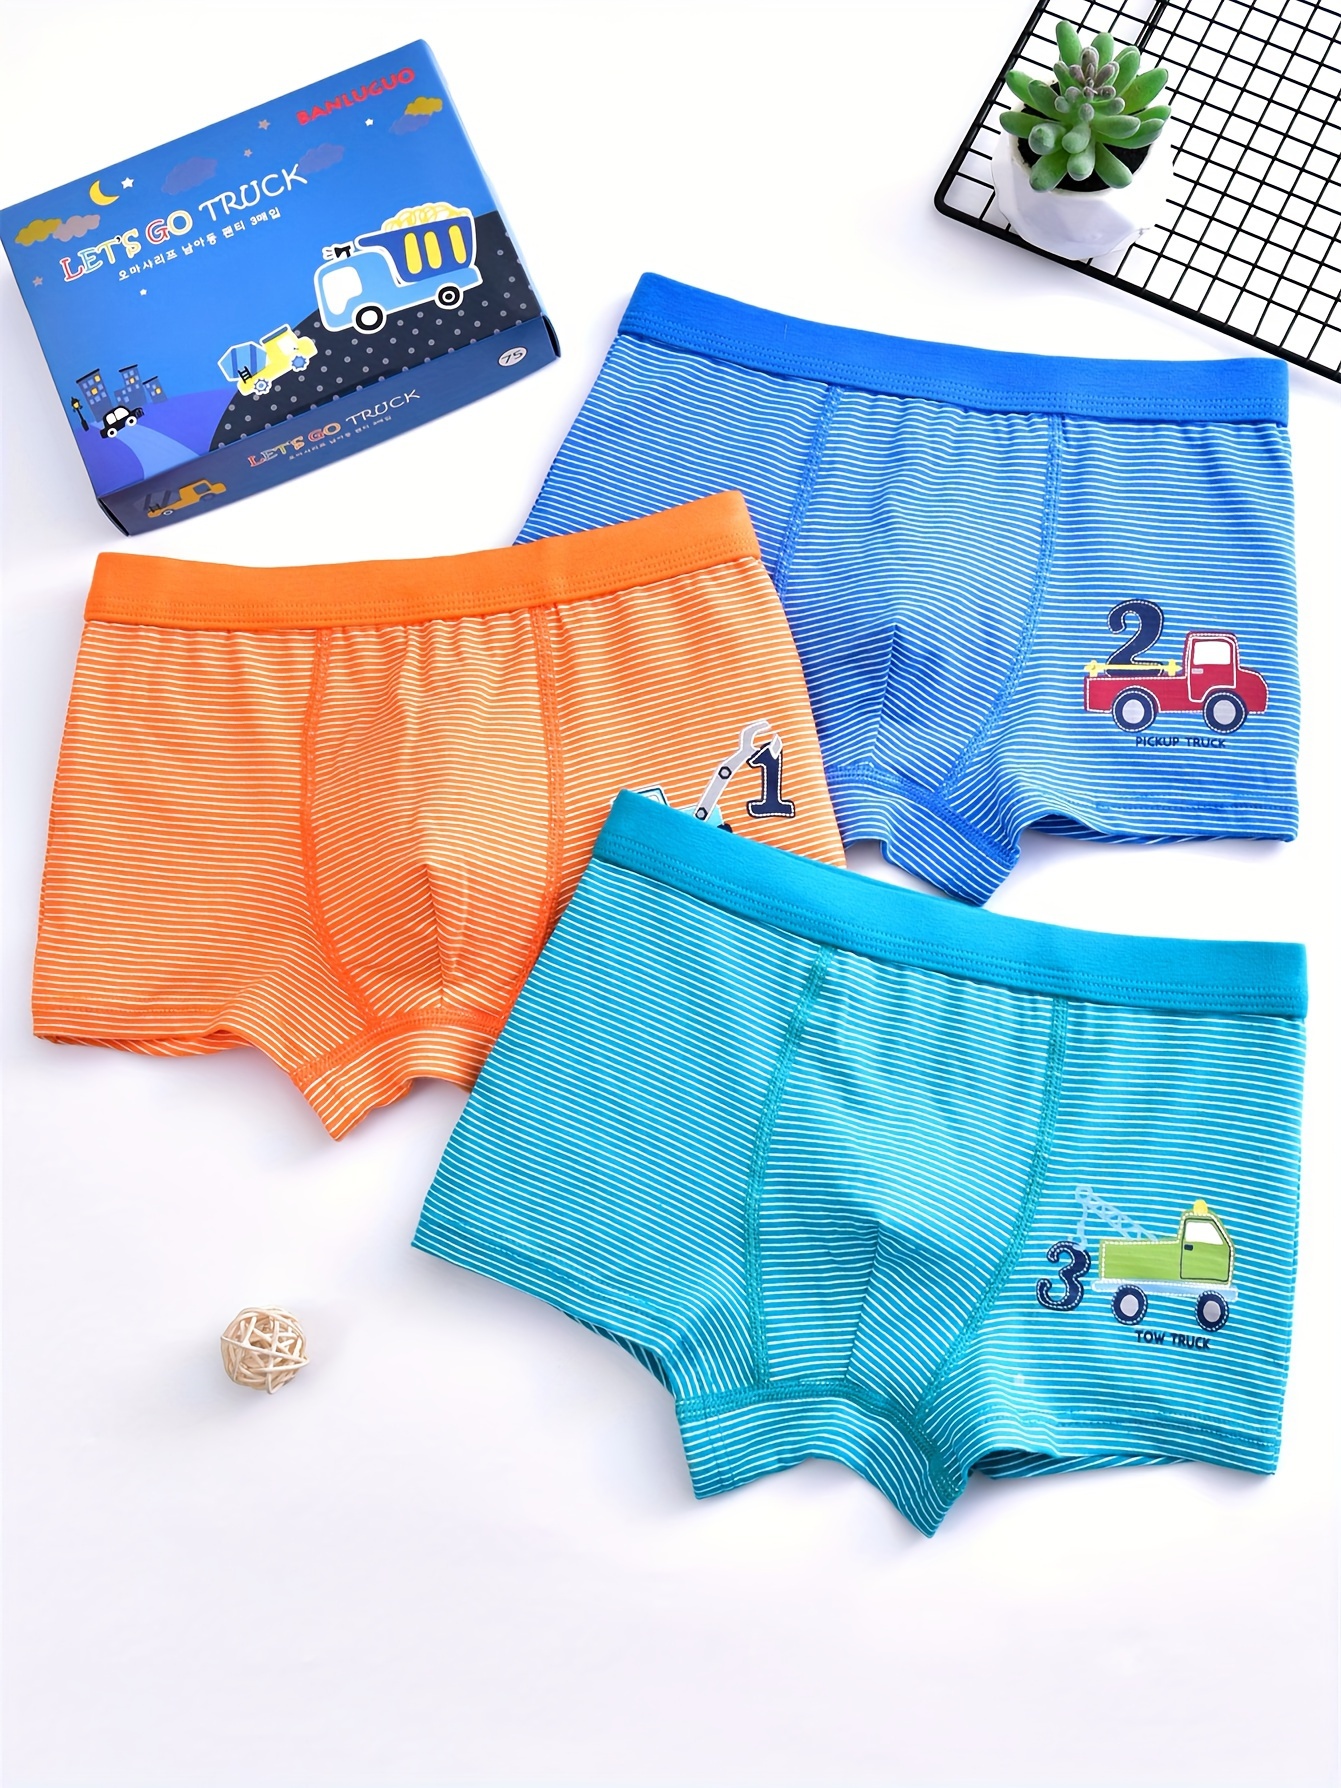 Little Boys' Underwear 3-Pack Truck Cute Animal Print Soft Cotton Briefs  Panties